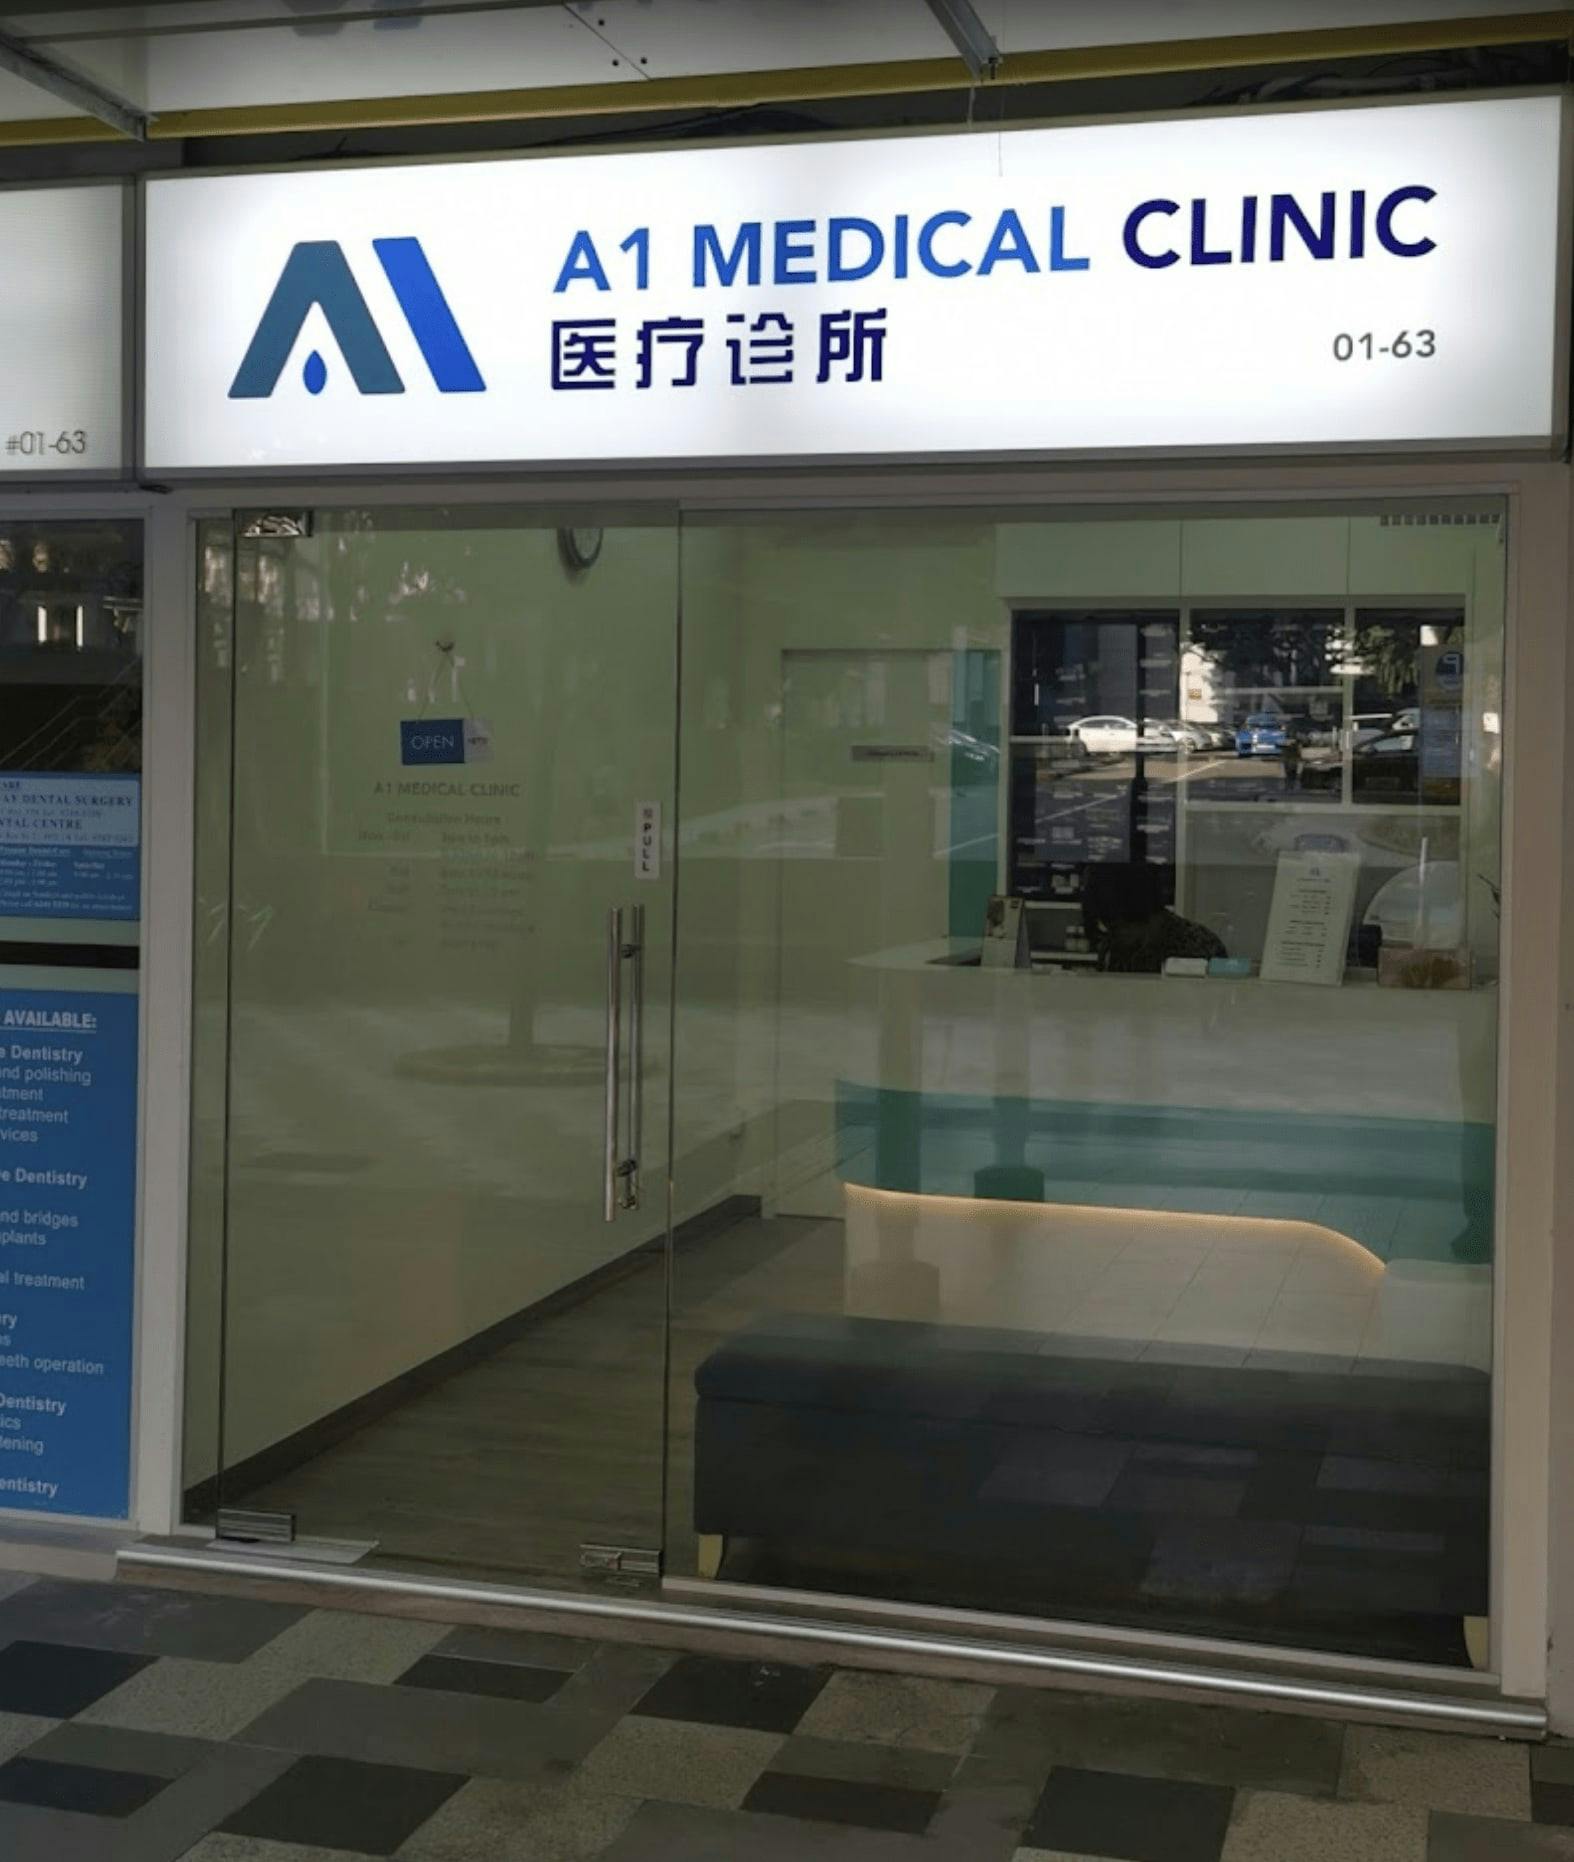 A1 Medical Clinic